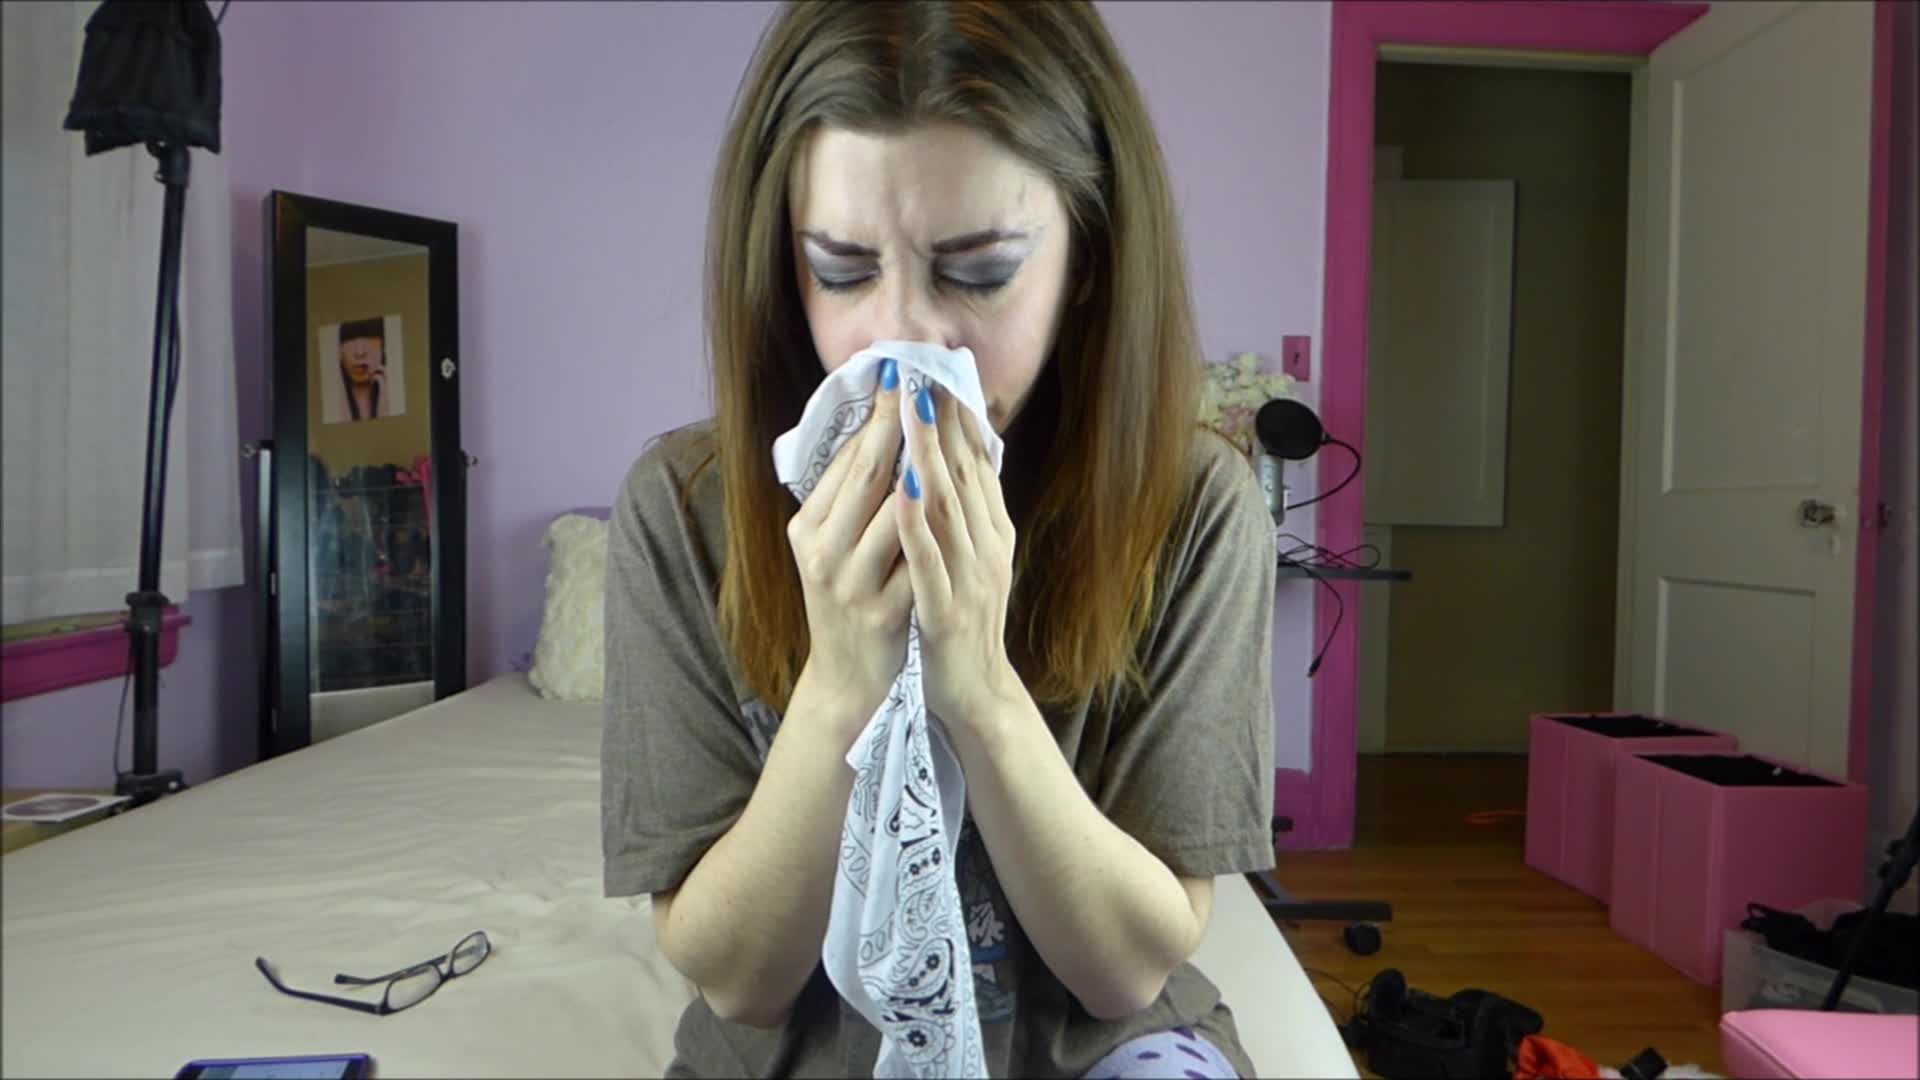 Sammy Blows Her Nose With White Bandana